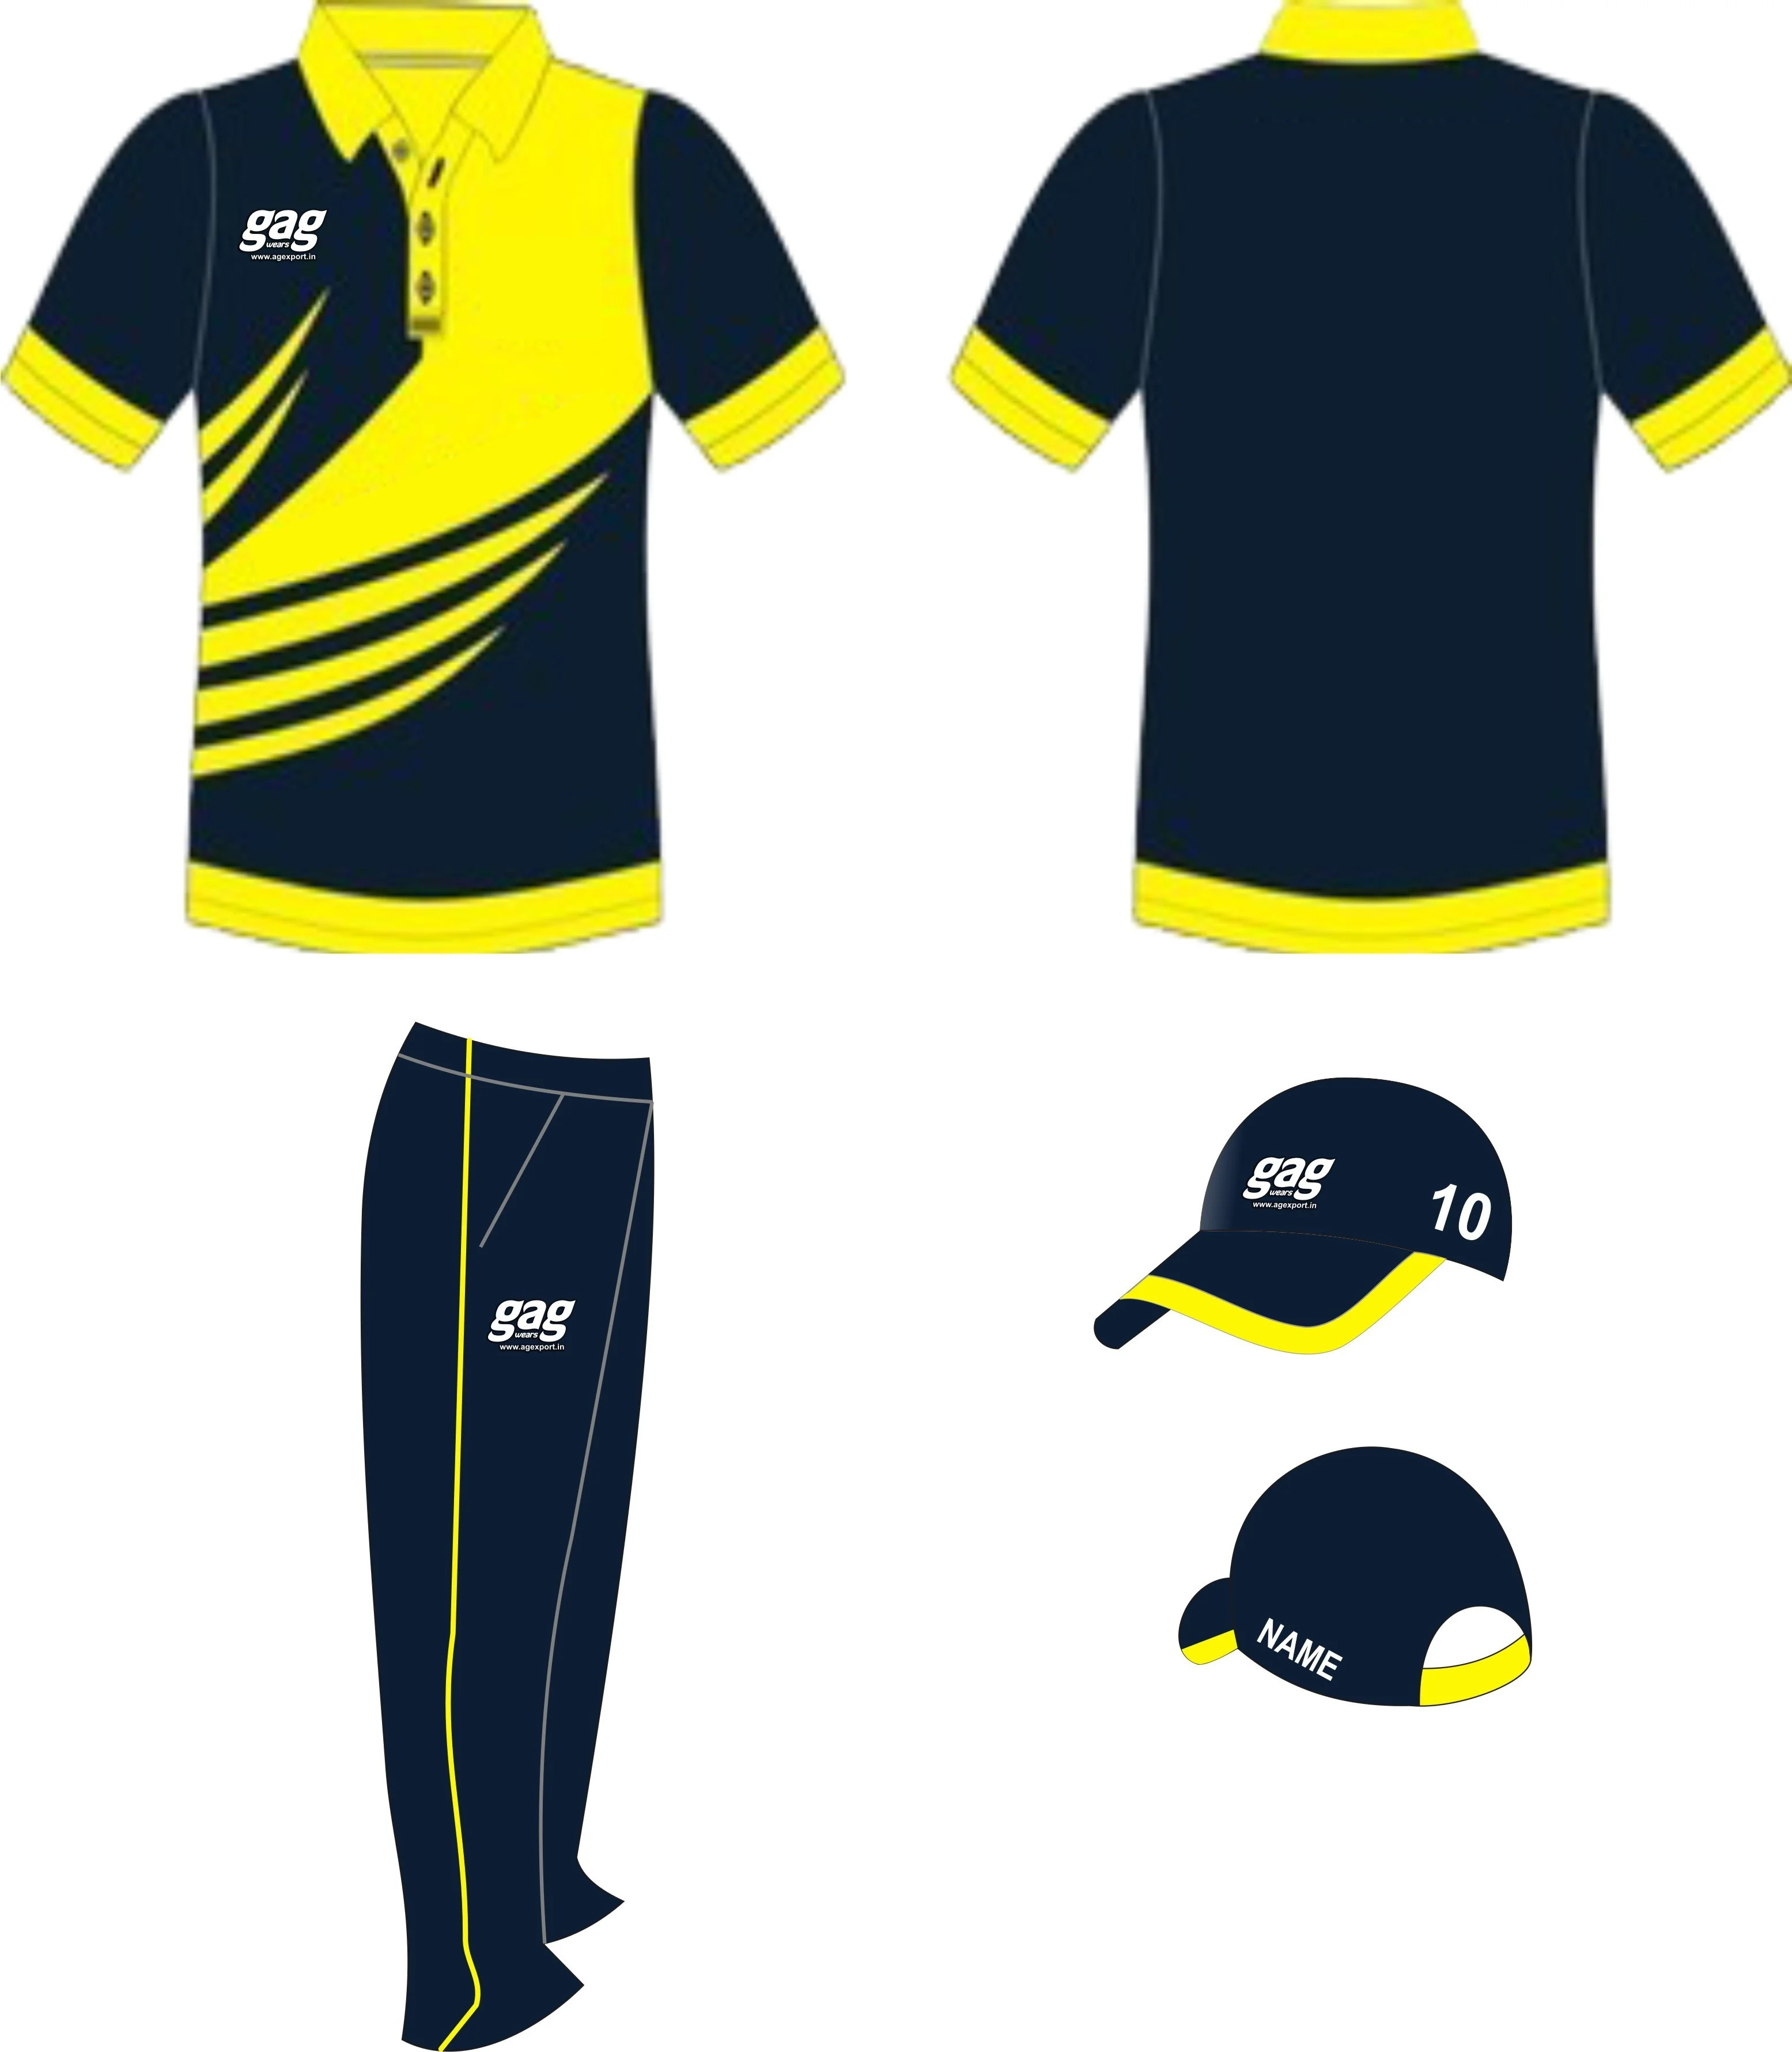 cricket jersey colour